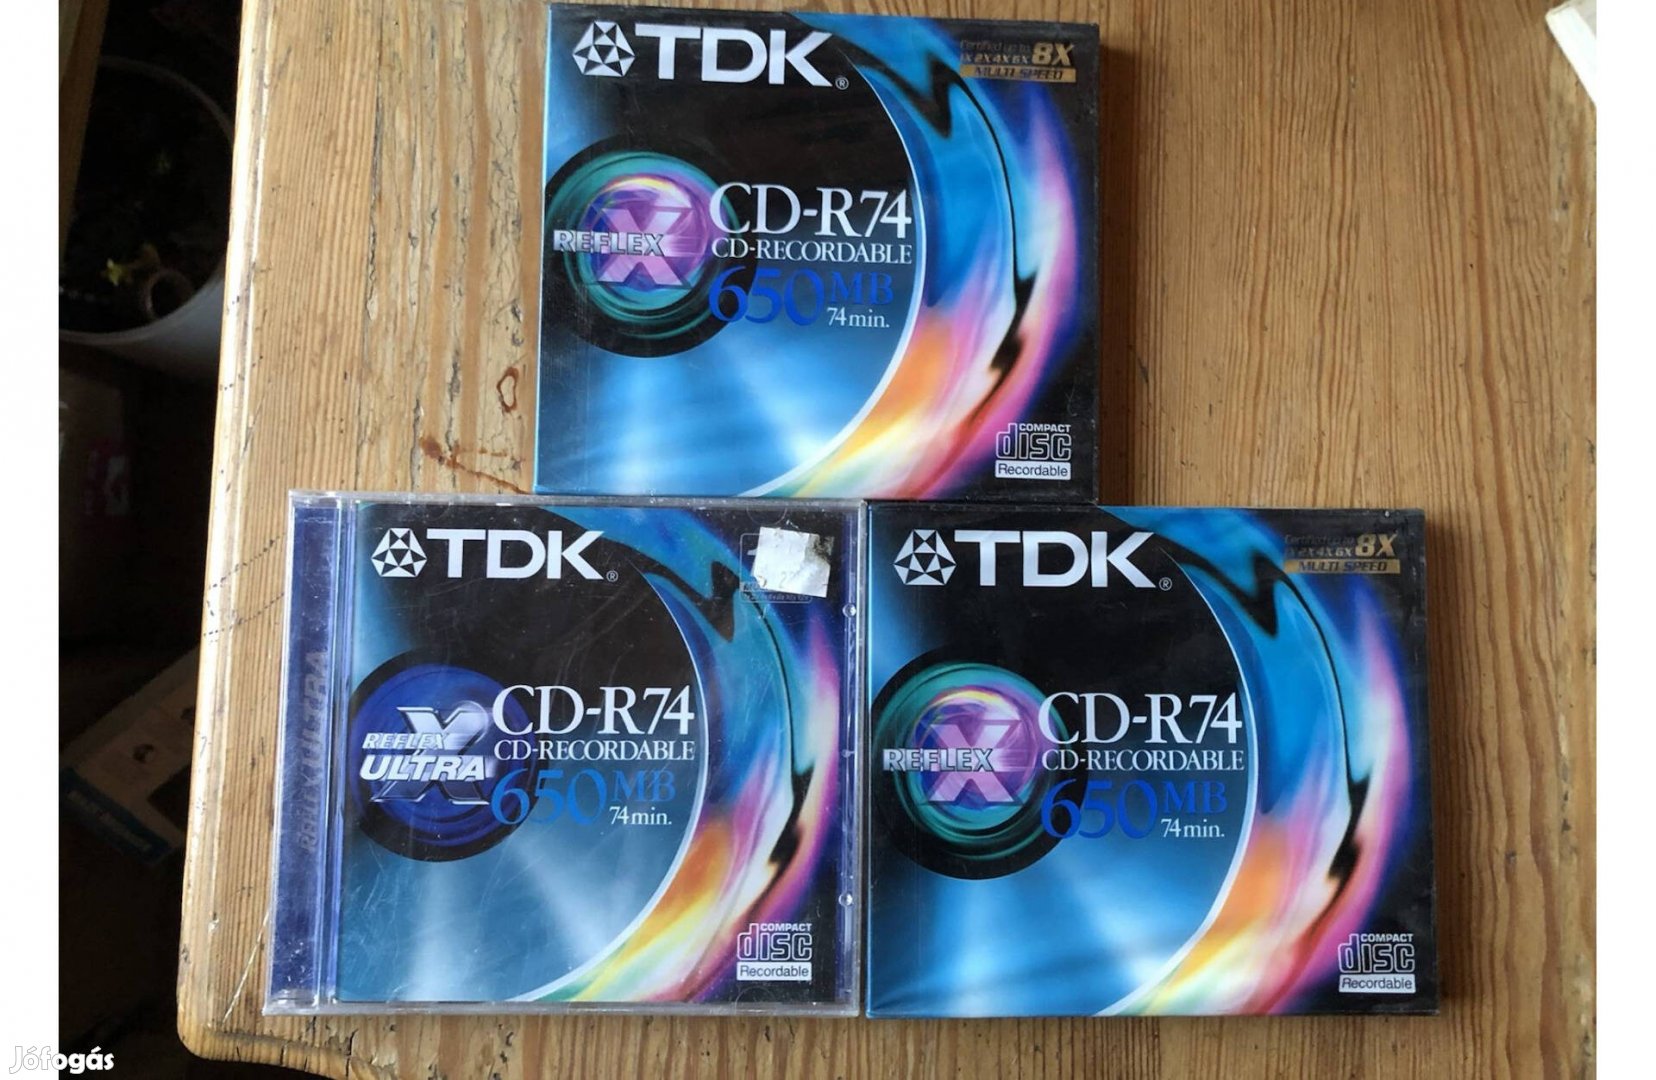 TDK CD -r74 új bontatlan üres CD 1000 Ft/db:Lenti